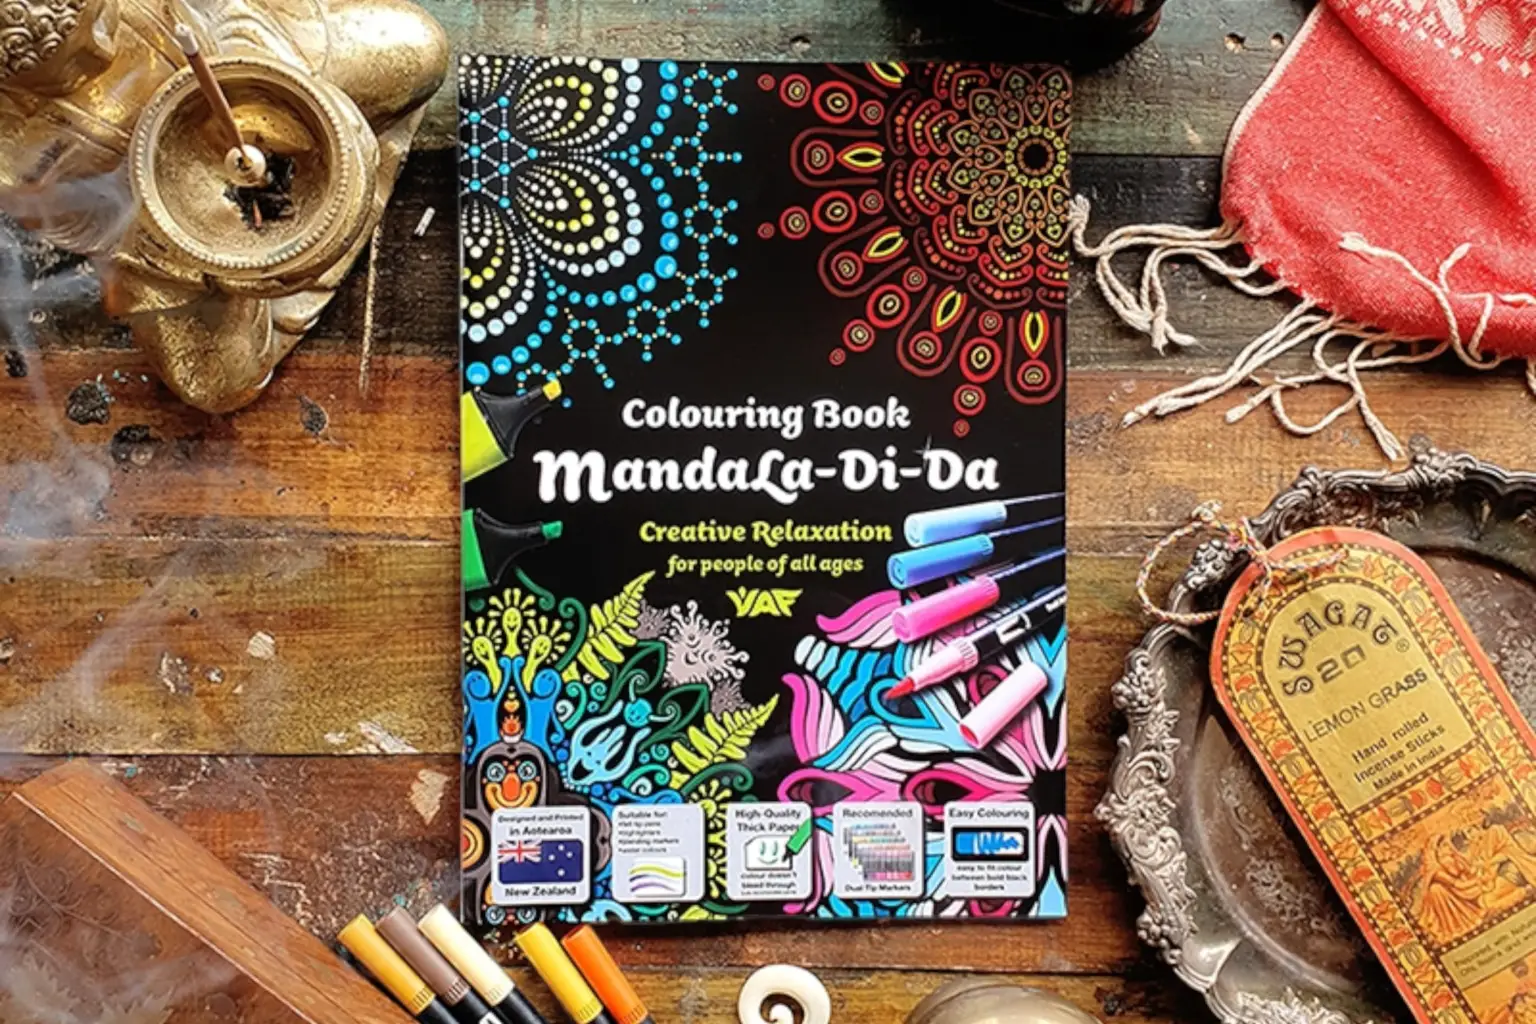 Mandala-Di-Da Colouring Book by Martin Kalabza